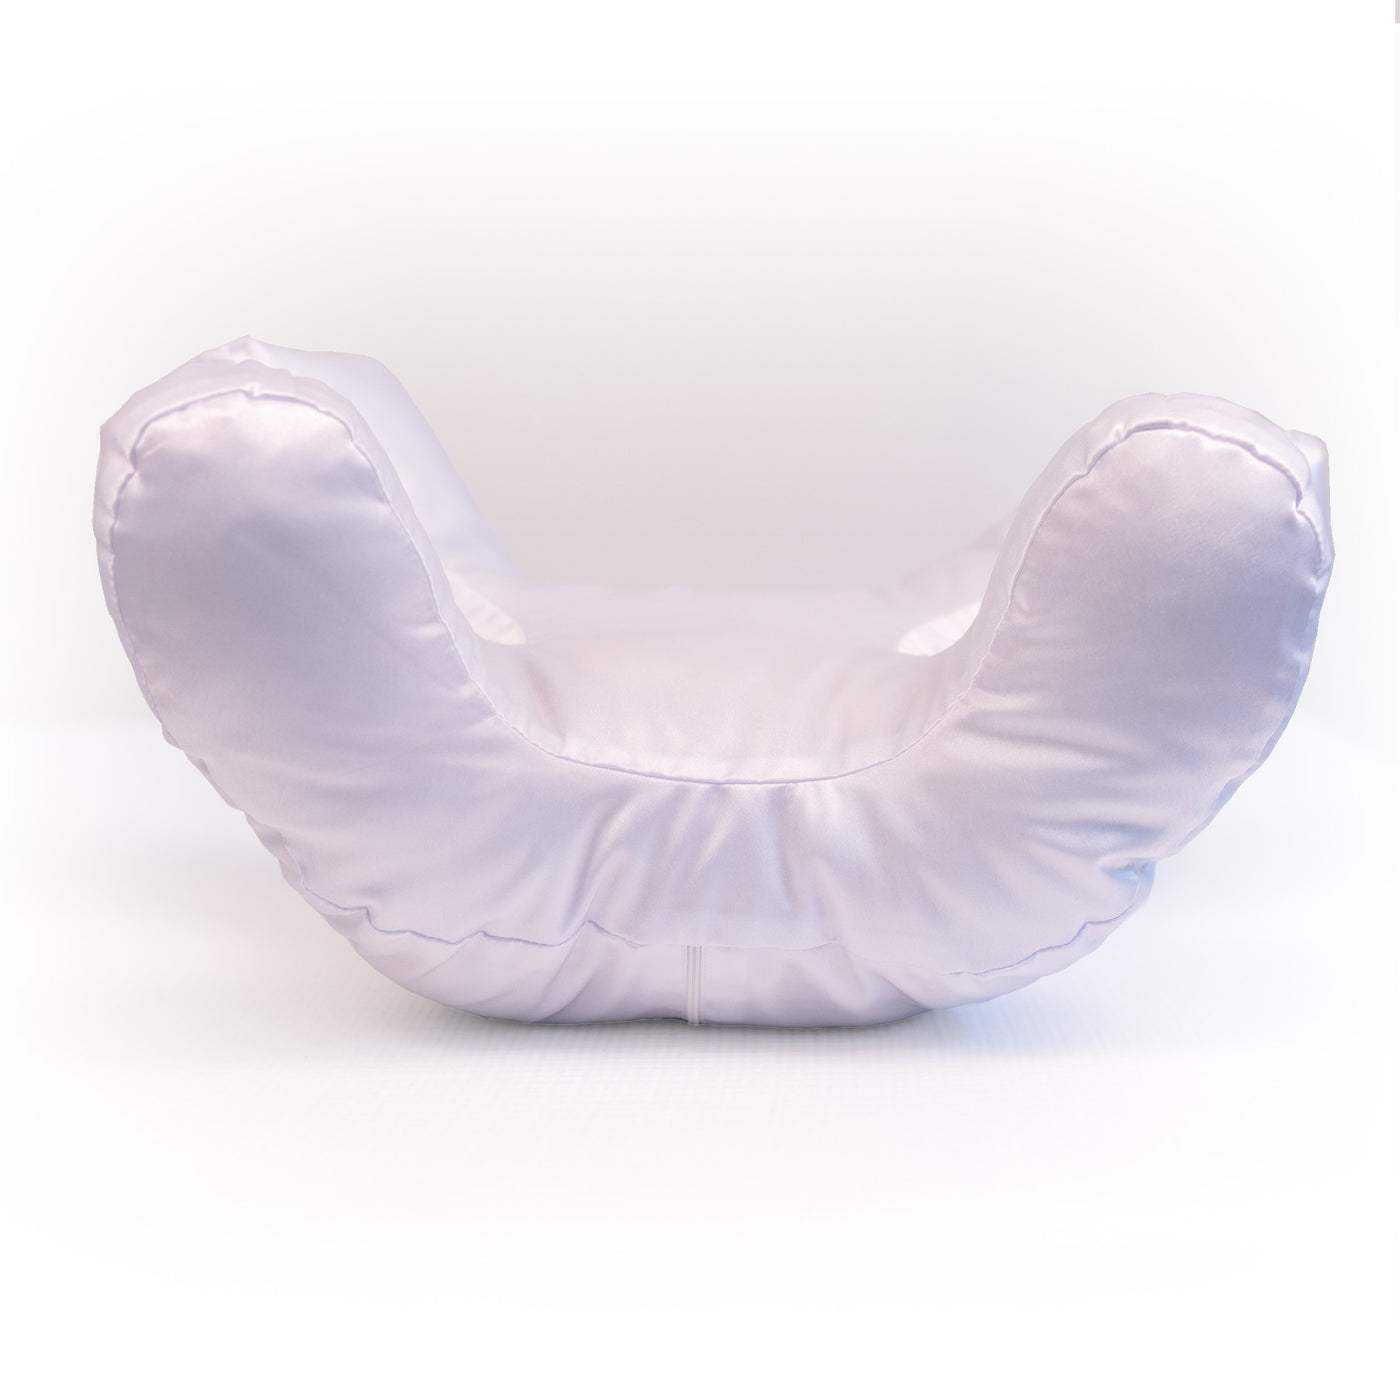 NEW Flawless Face Pillow Cloud + FREE White Satin Pillowcase